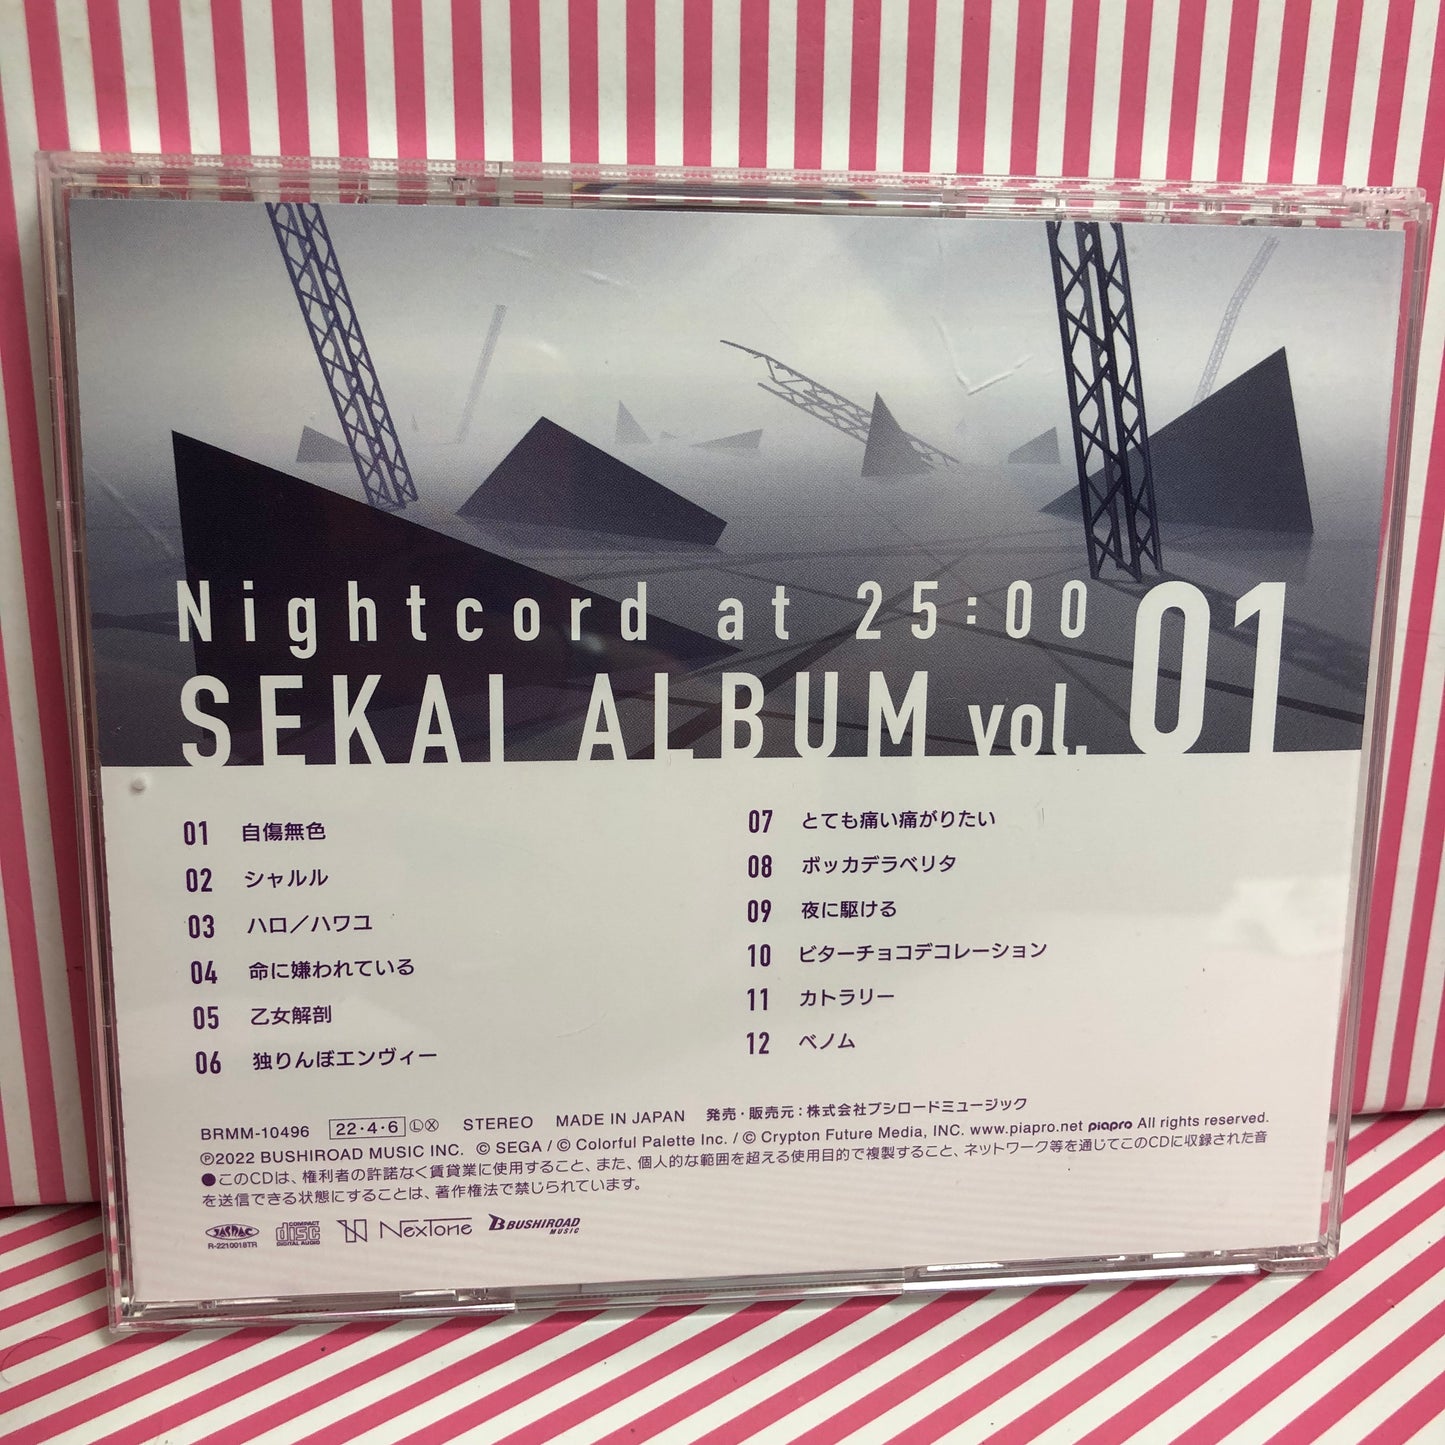 Nightcord at 25:00 - Sekai Album Vol. 1 Project Sekai Colorful Stage! ft. Hatsune Miku